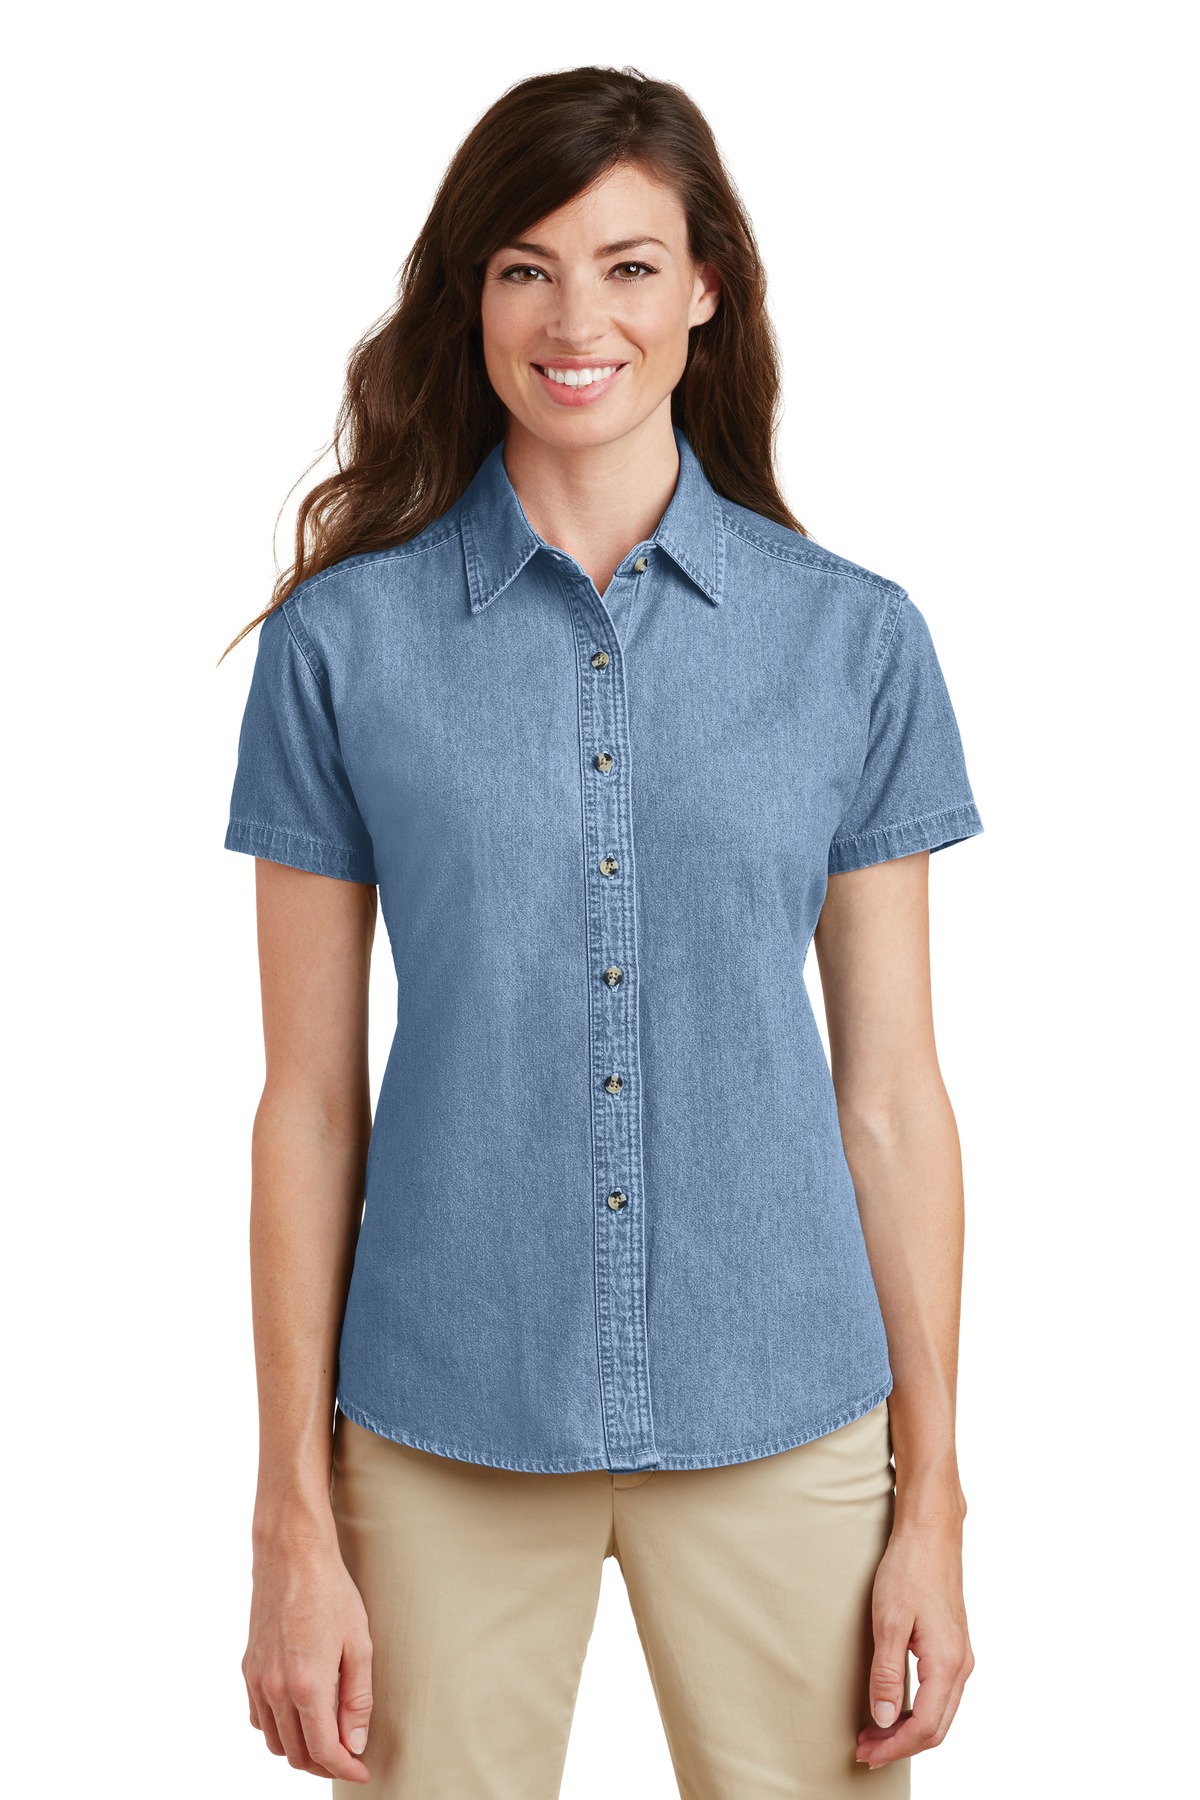 Port & Company ® - Ladies Short Sleeve Value Denim Shirt. LSP11 - image 1 of 2